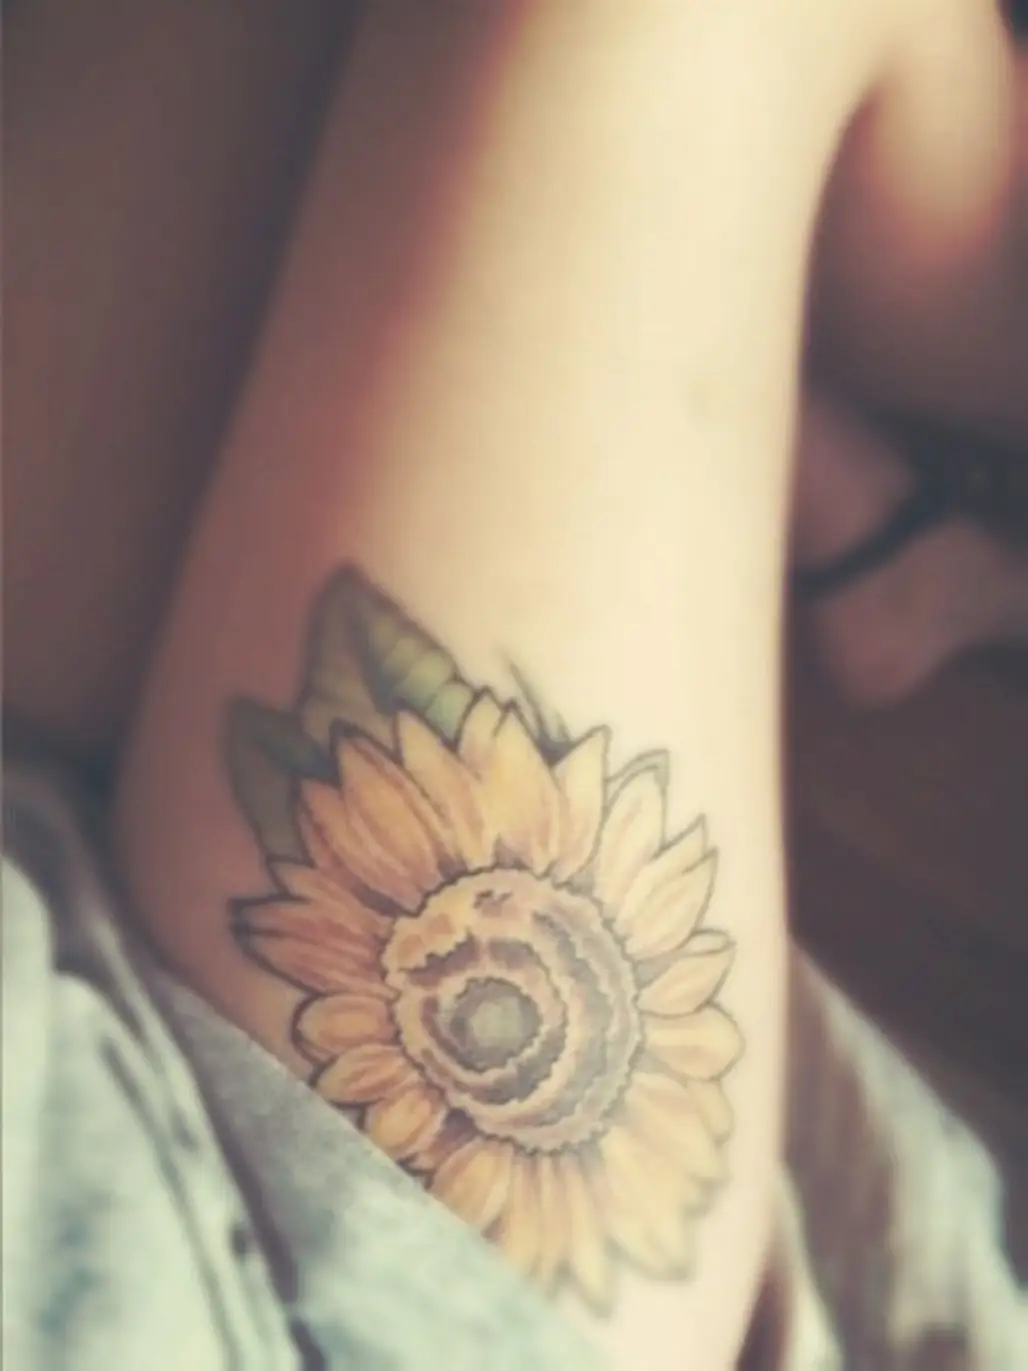 tattoo,flower,close up,arm,hand,